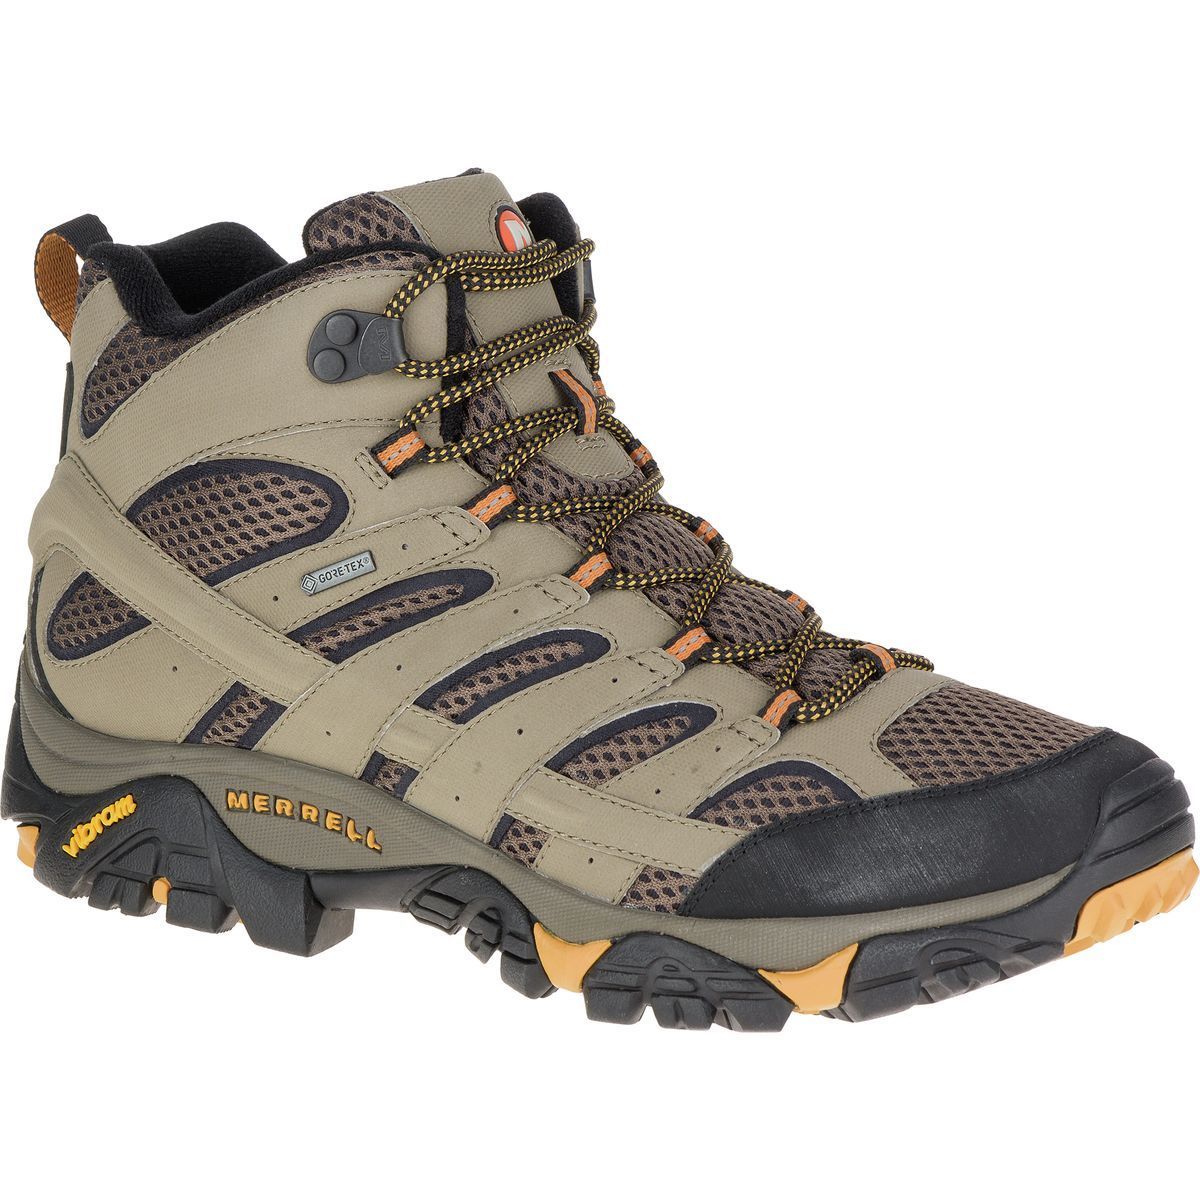 Merrell Moab 2 Mid GTX Hiking Boot - Men's - Footwear